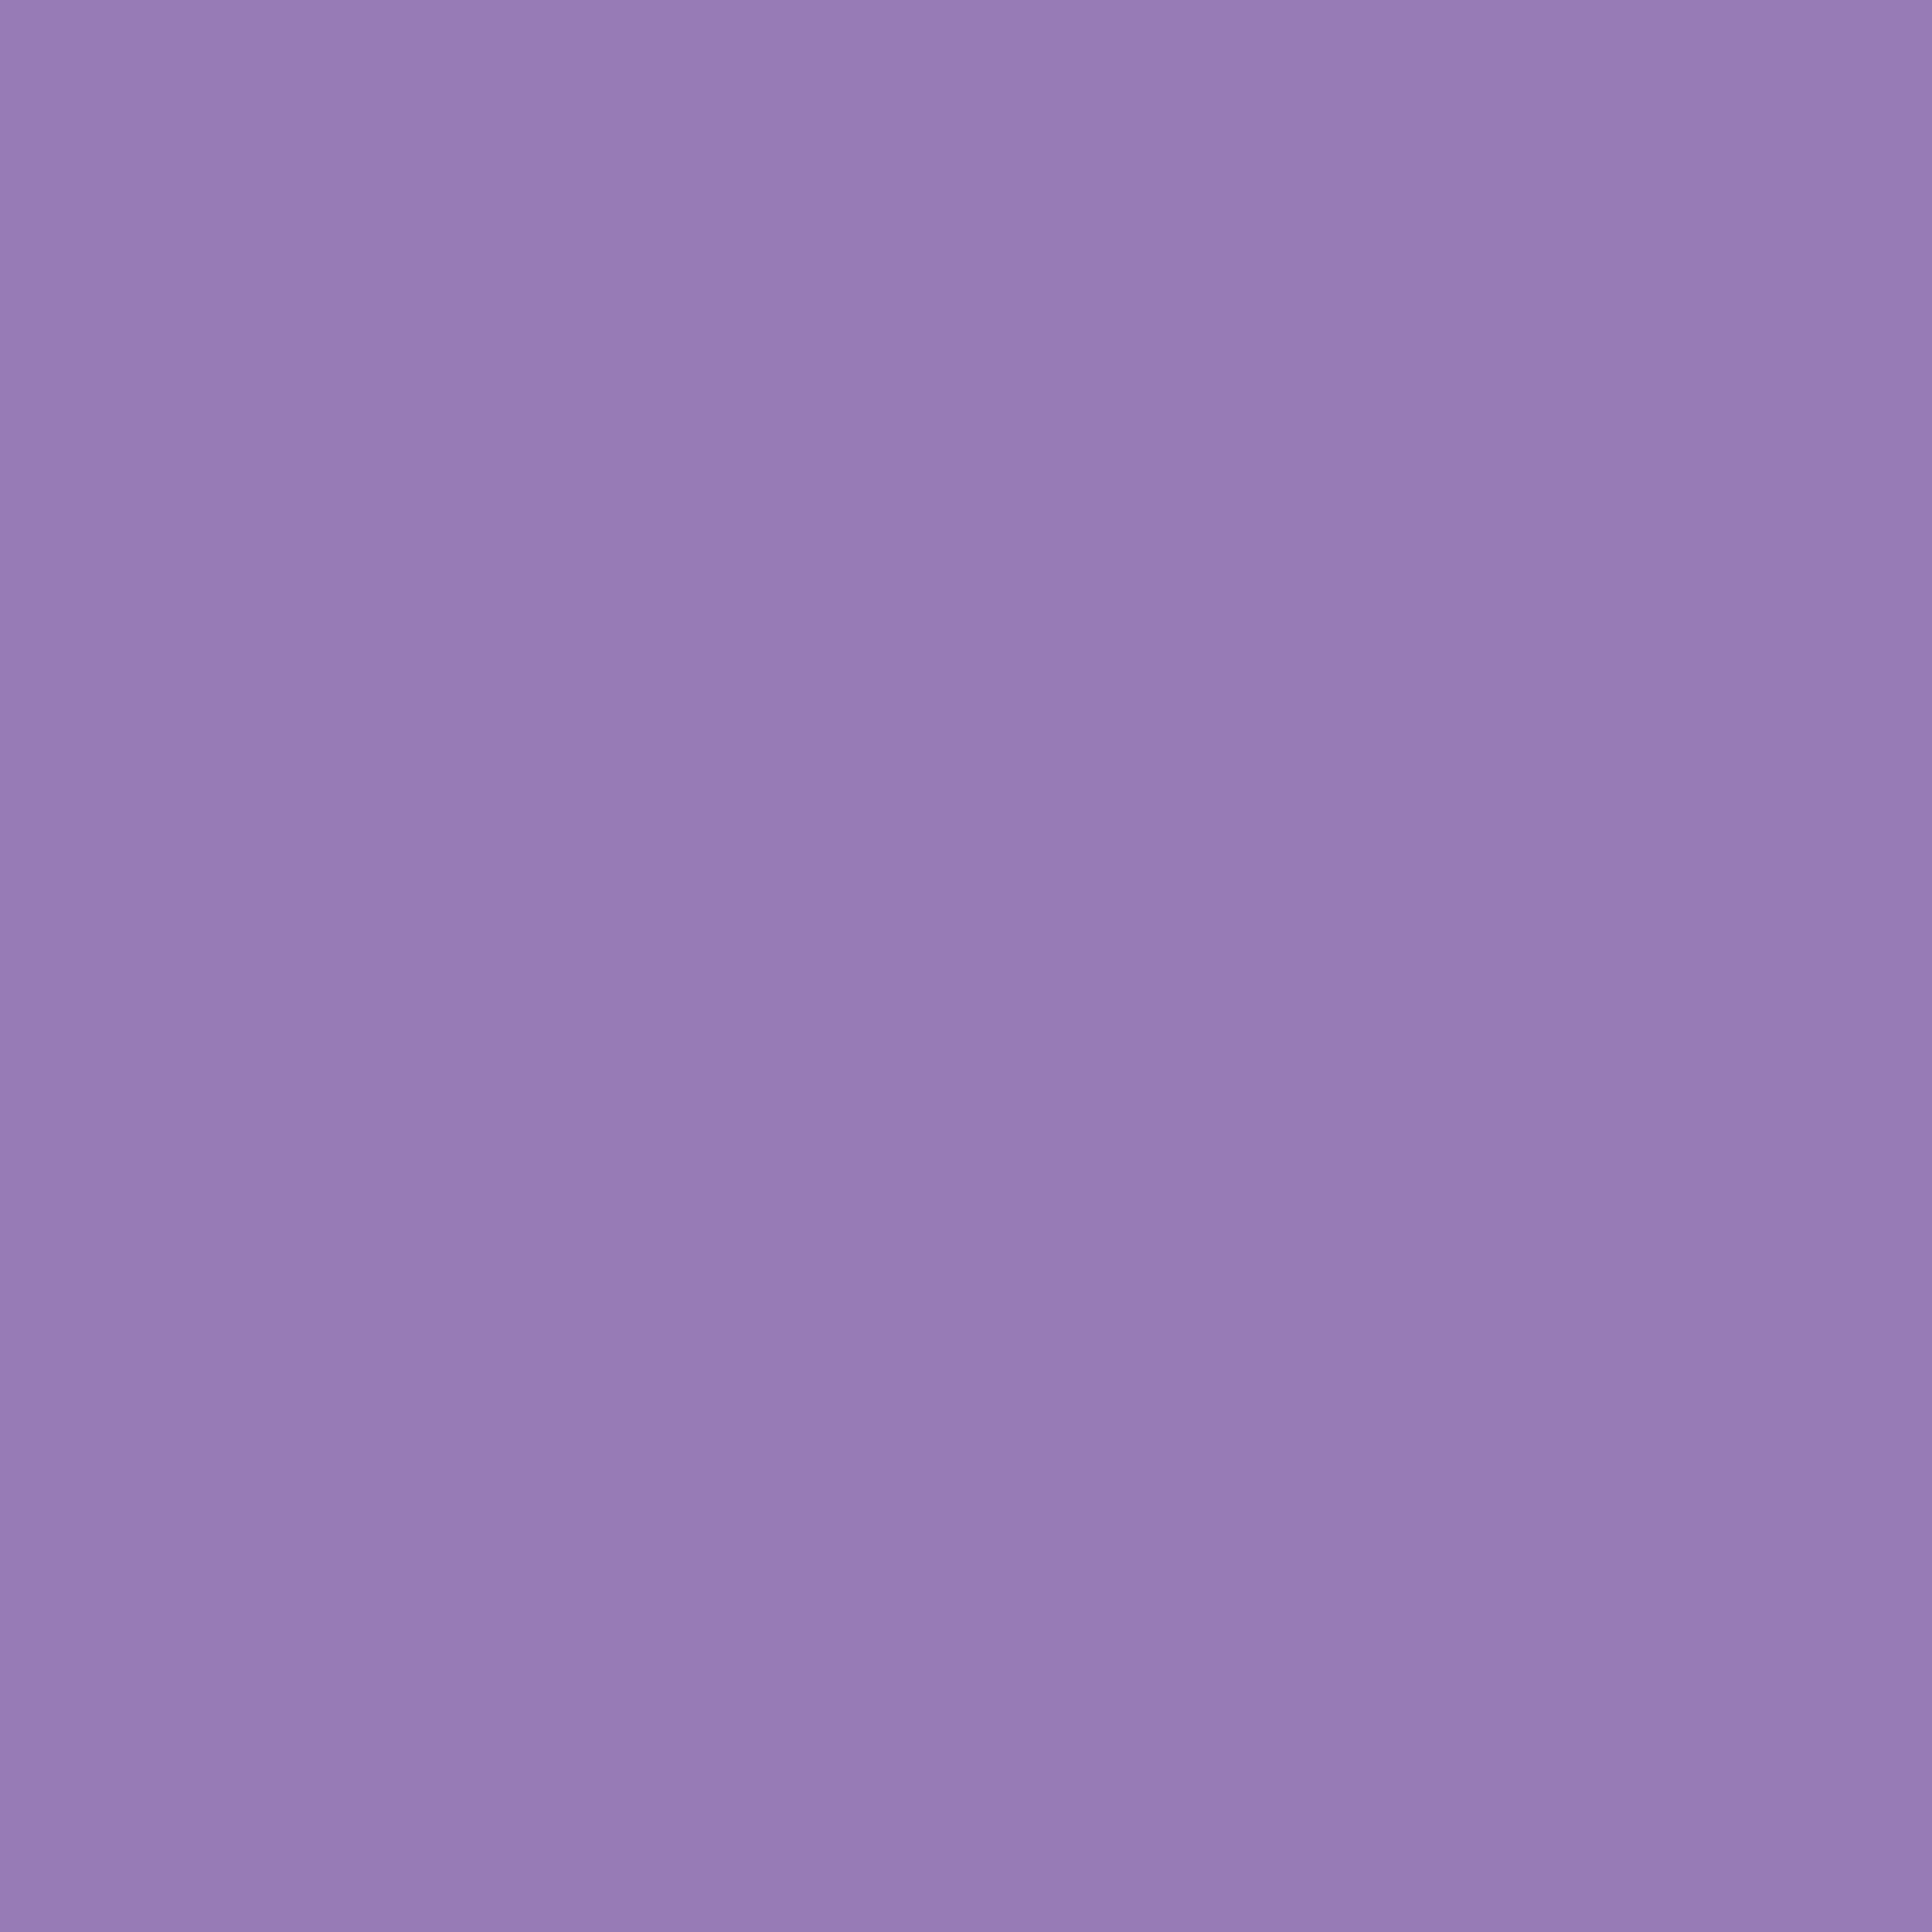 3600x3600 Lavender Purple Solid Color Background